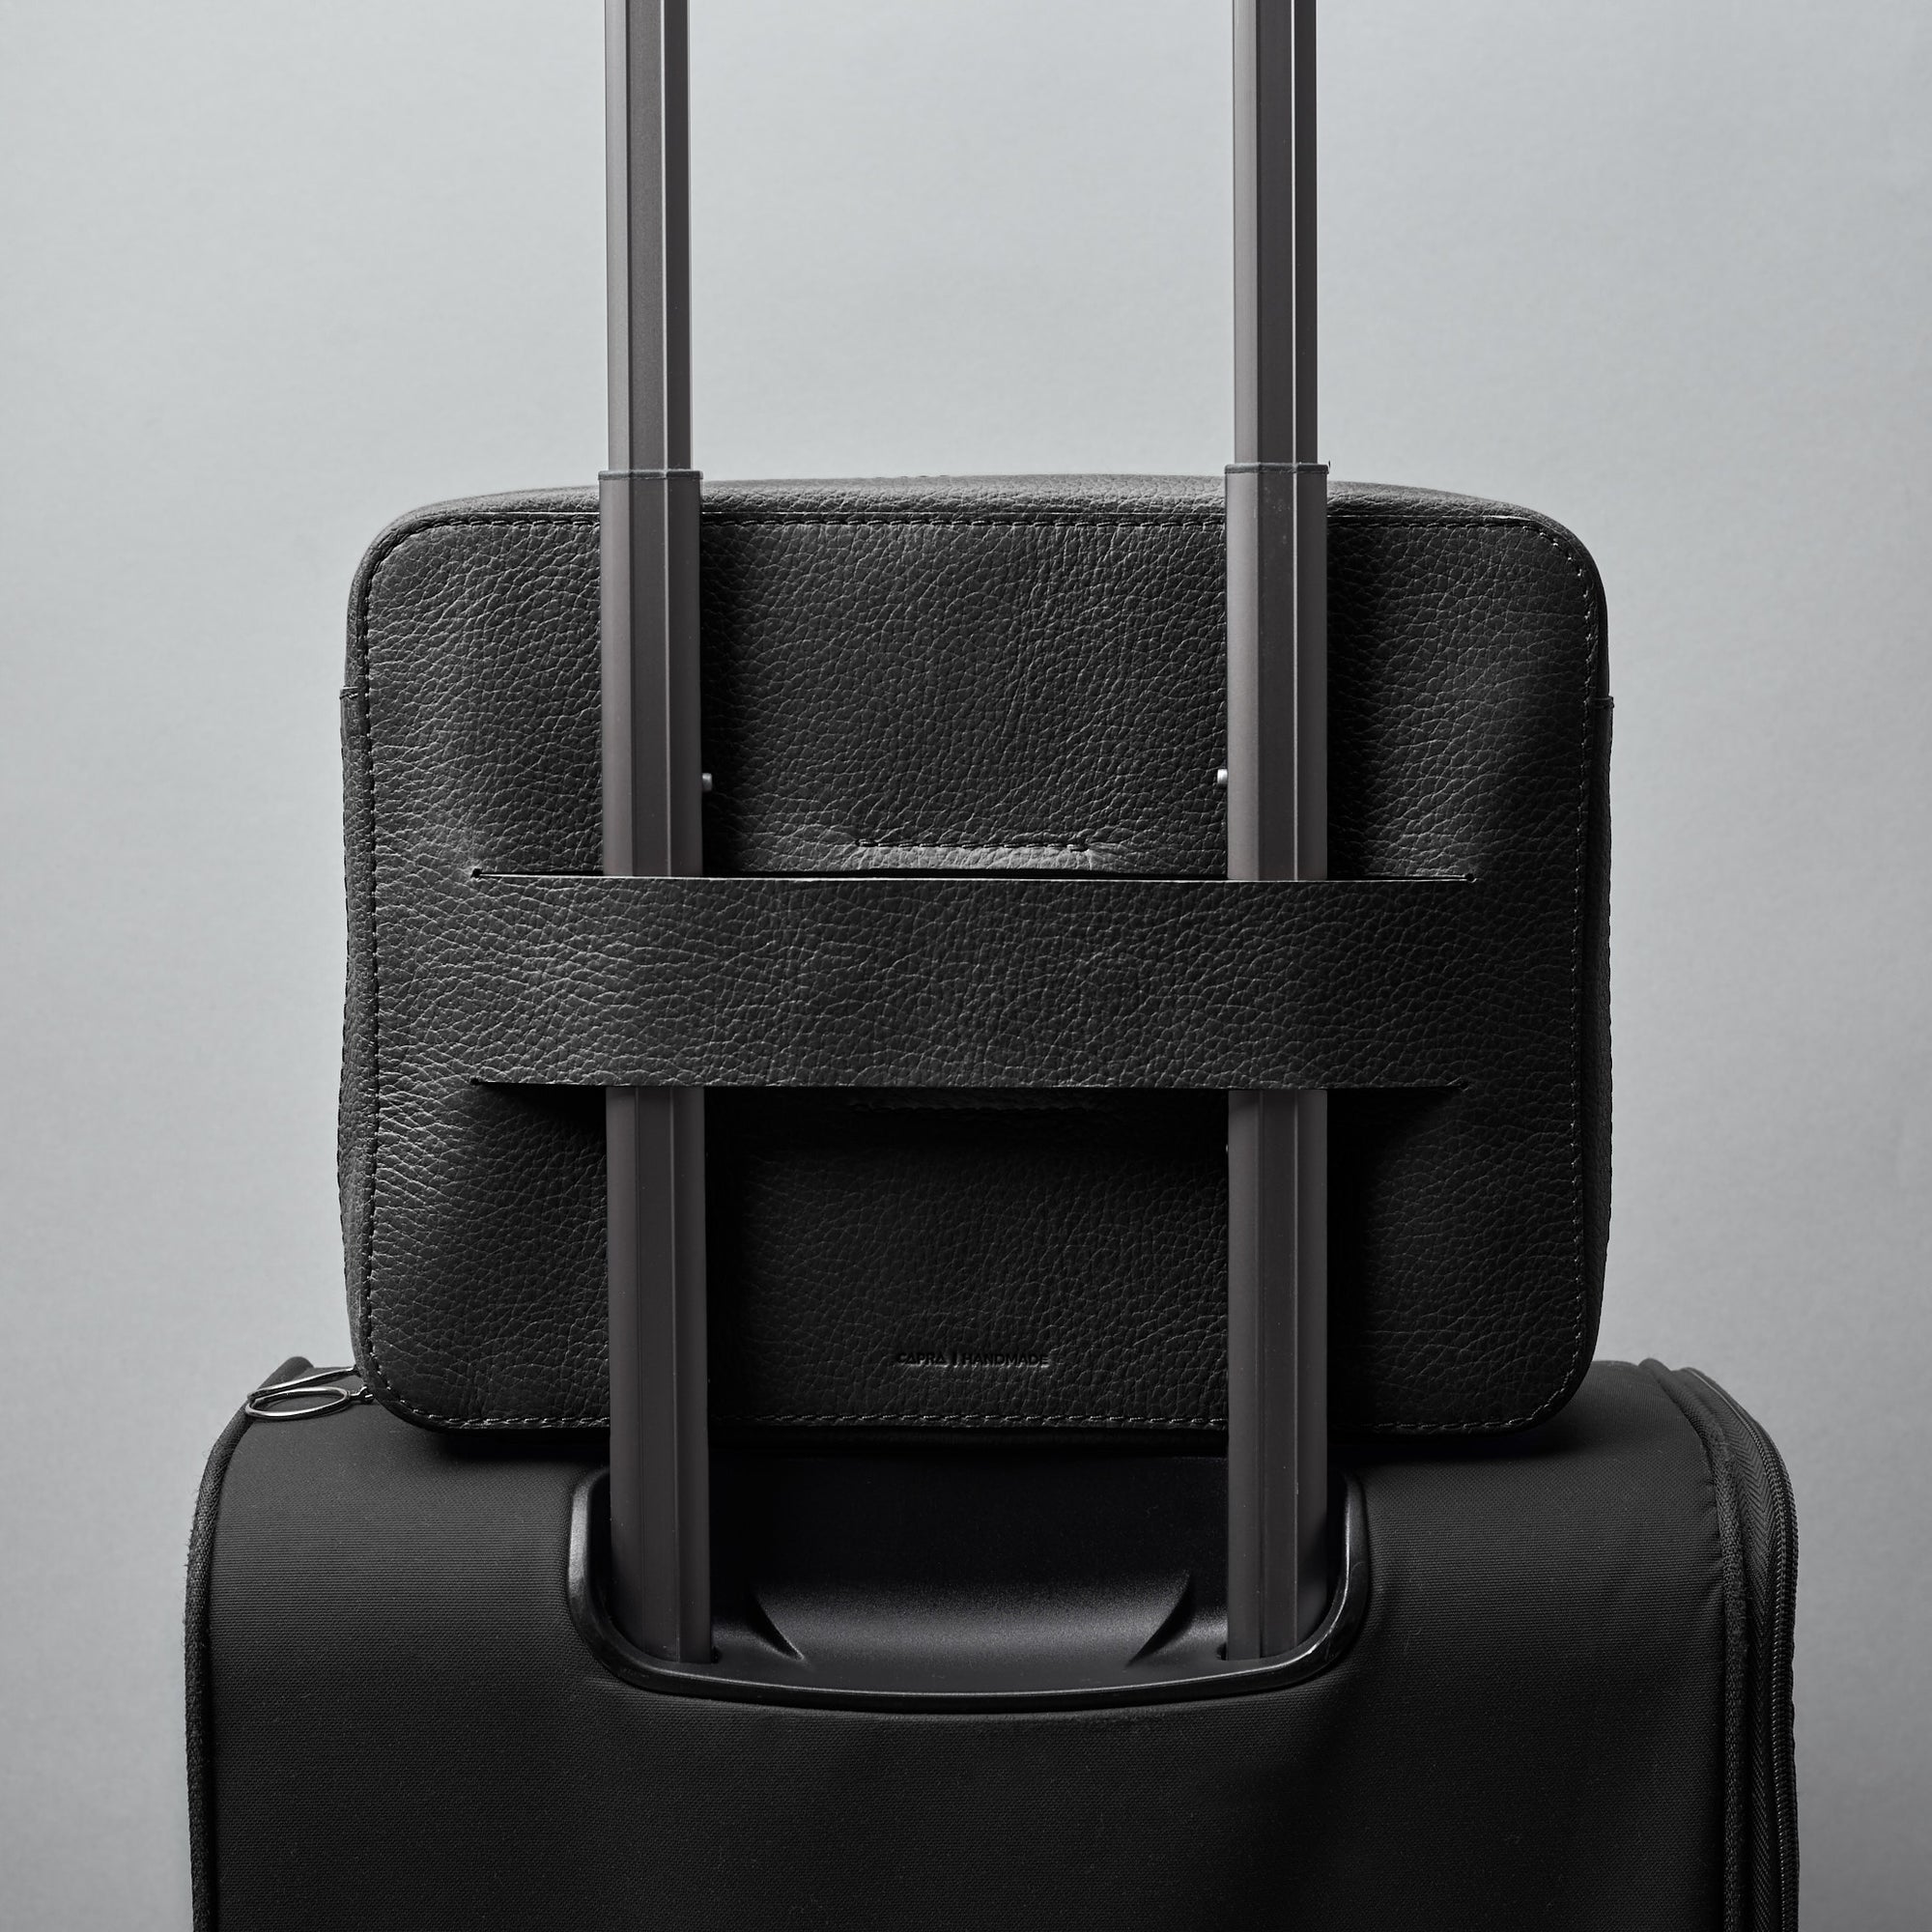 Discreet luggage strap. Black tech accessory organizer by Capra Leather